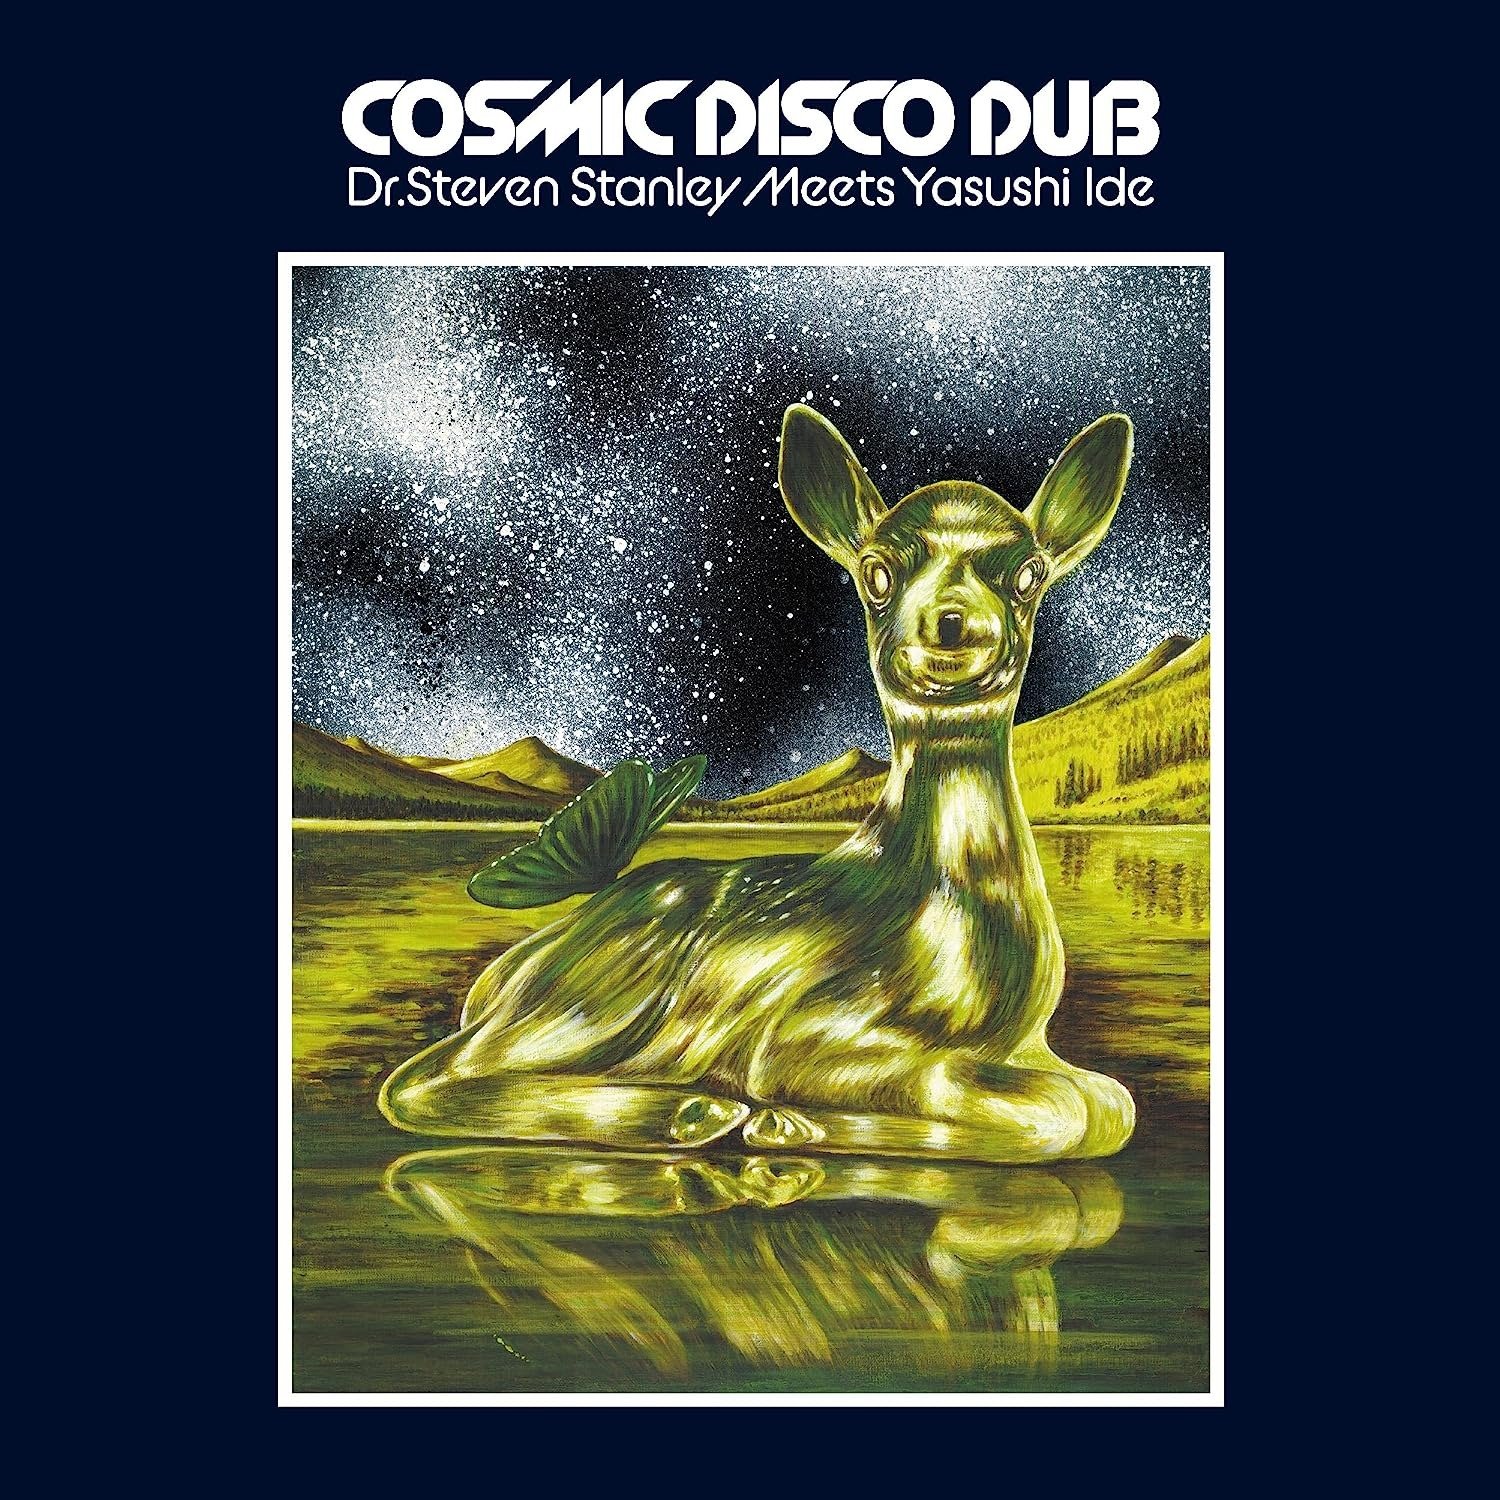 CD Shop - IDE, YASUSHI DR. STEVEN STANLEY MEETS YASUSHI IDE - COSMIC DISCO DUB